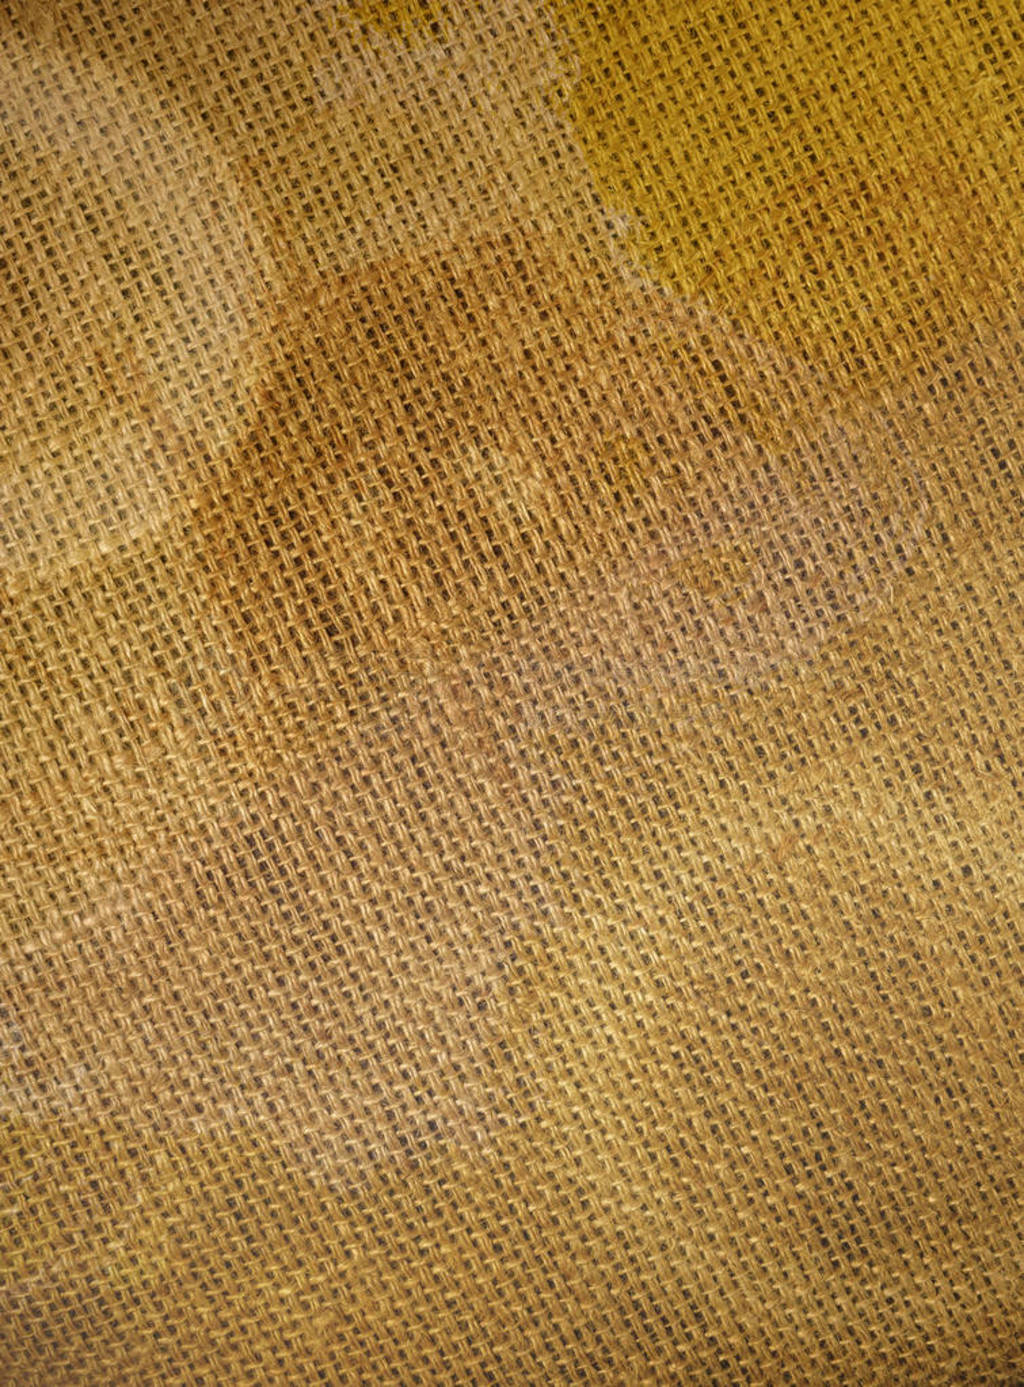 Jute hessian sackcloth canvas woven texture pattern background